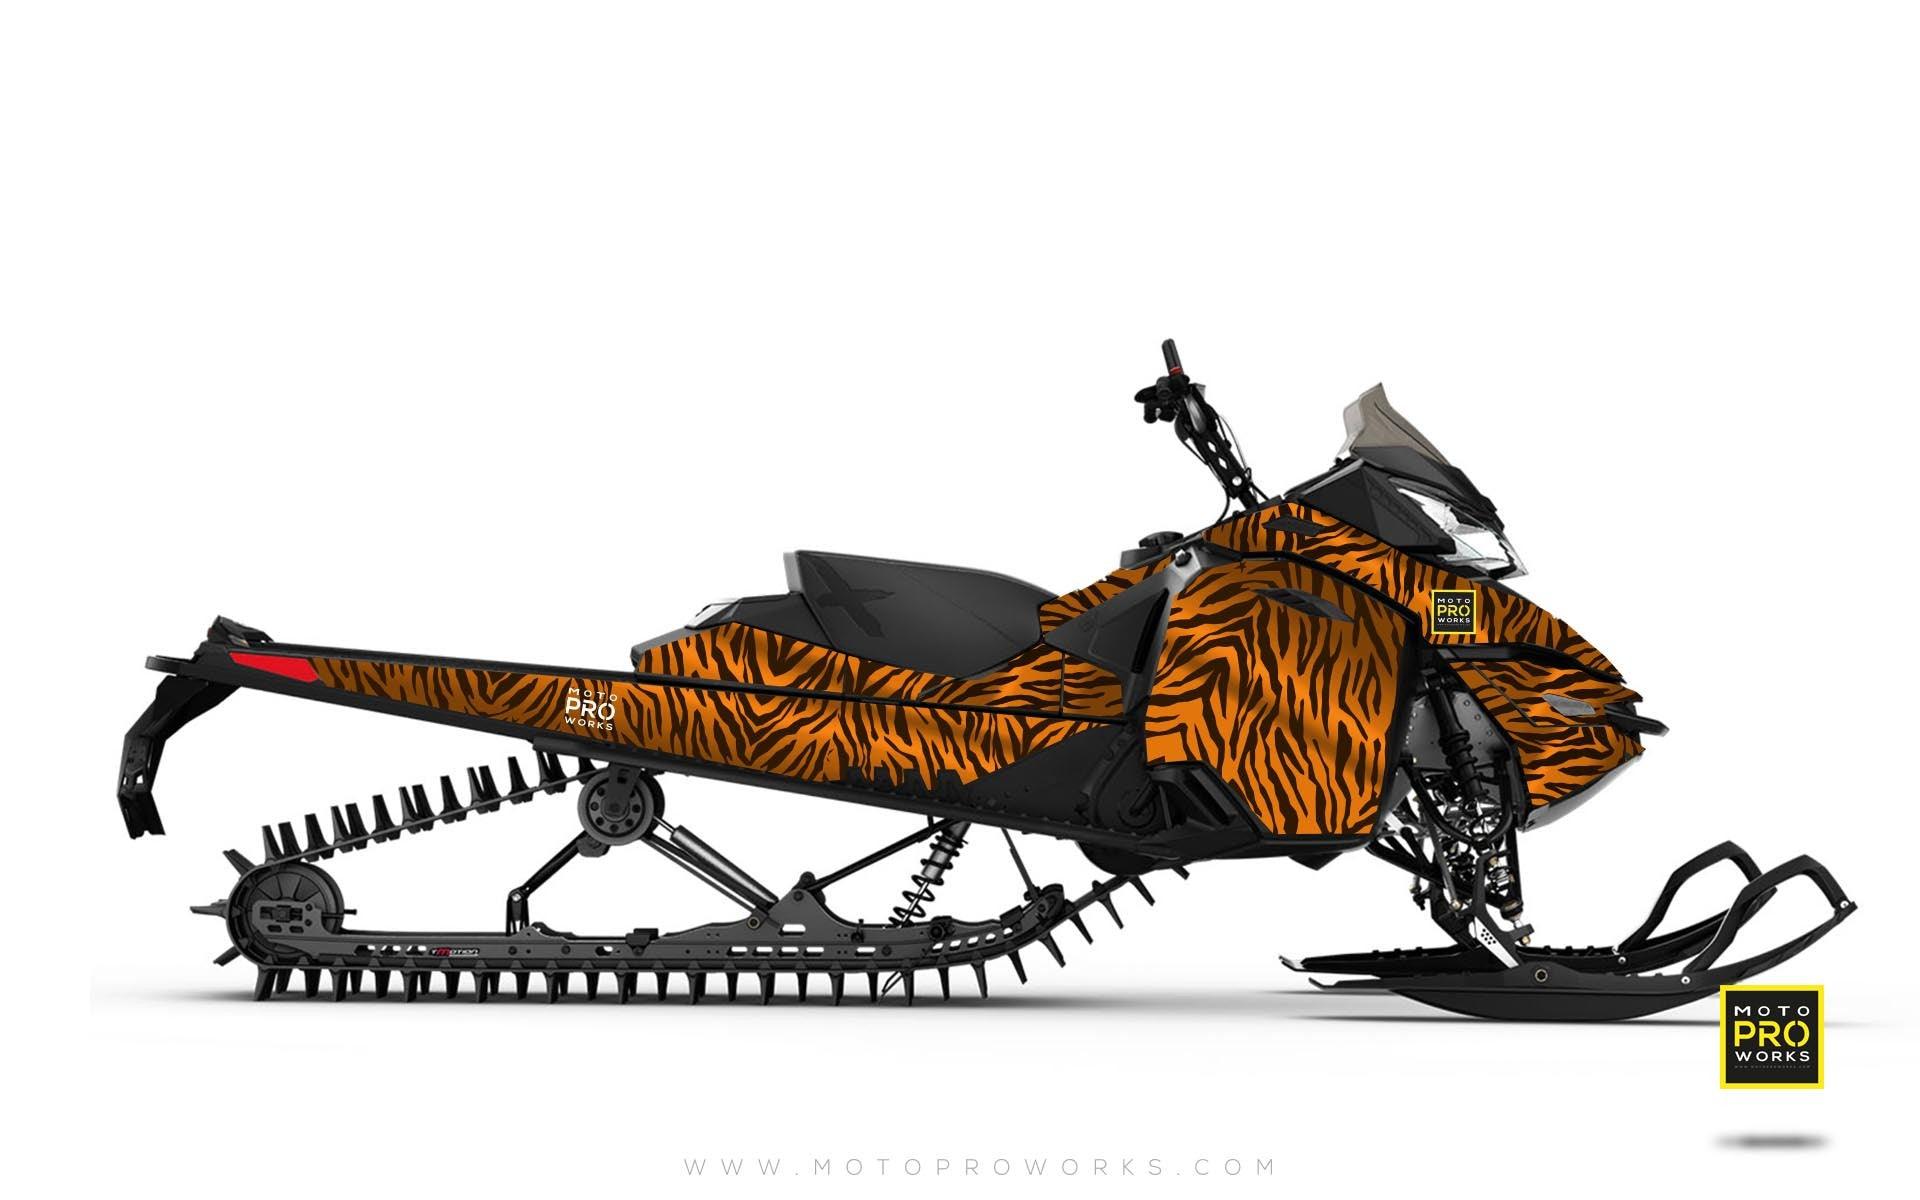 Ski-Doo Graphics - "Stripey" (solid orange) - MotoProWorks | Decals and Bike Graphic kit